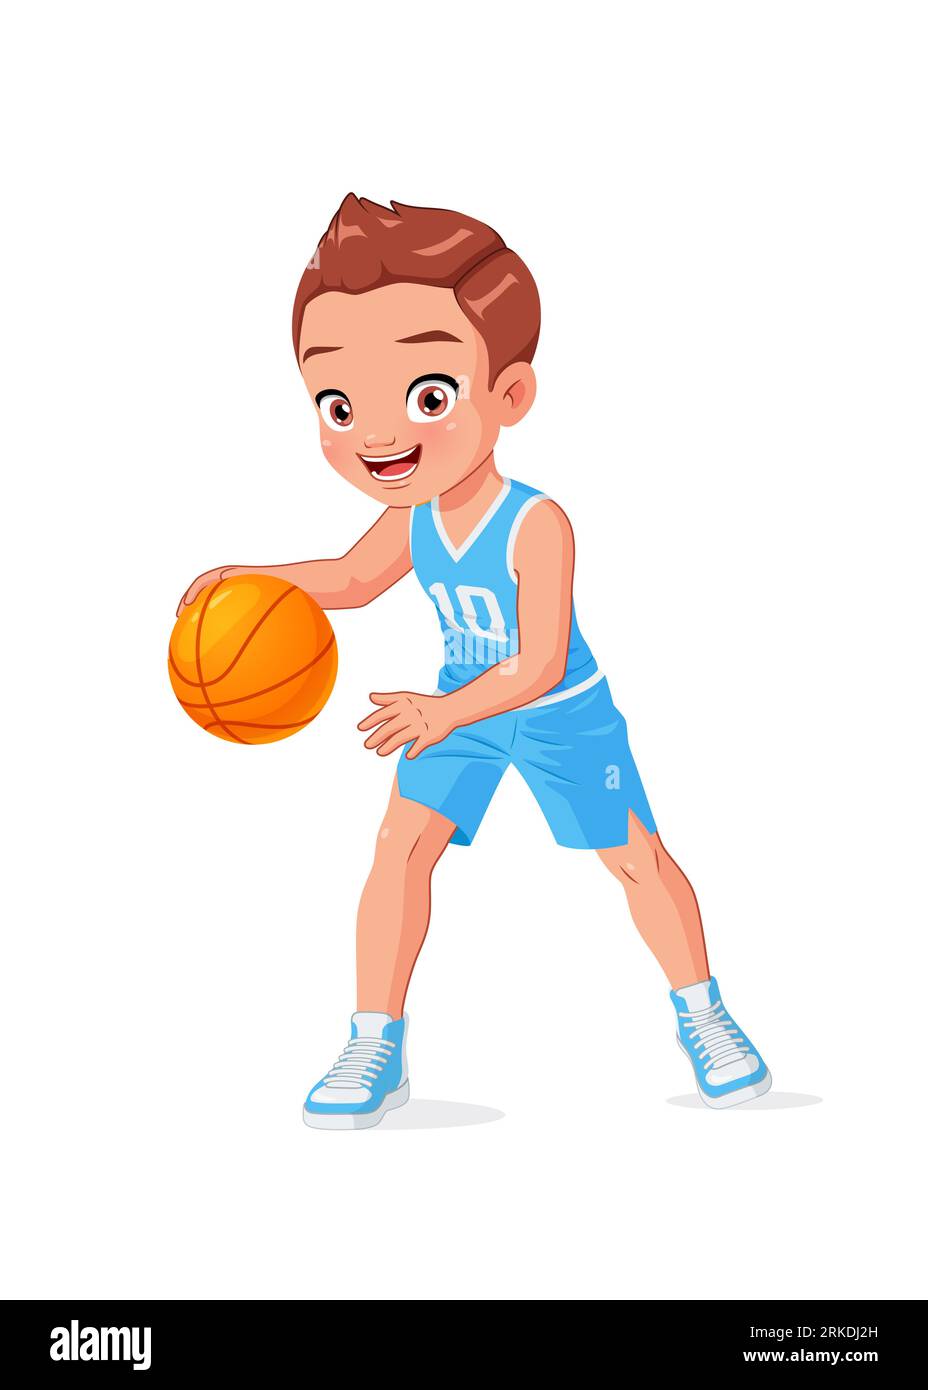 Cartoon illustration child playing basketball hi-res stock